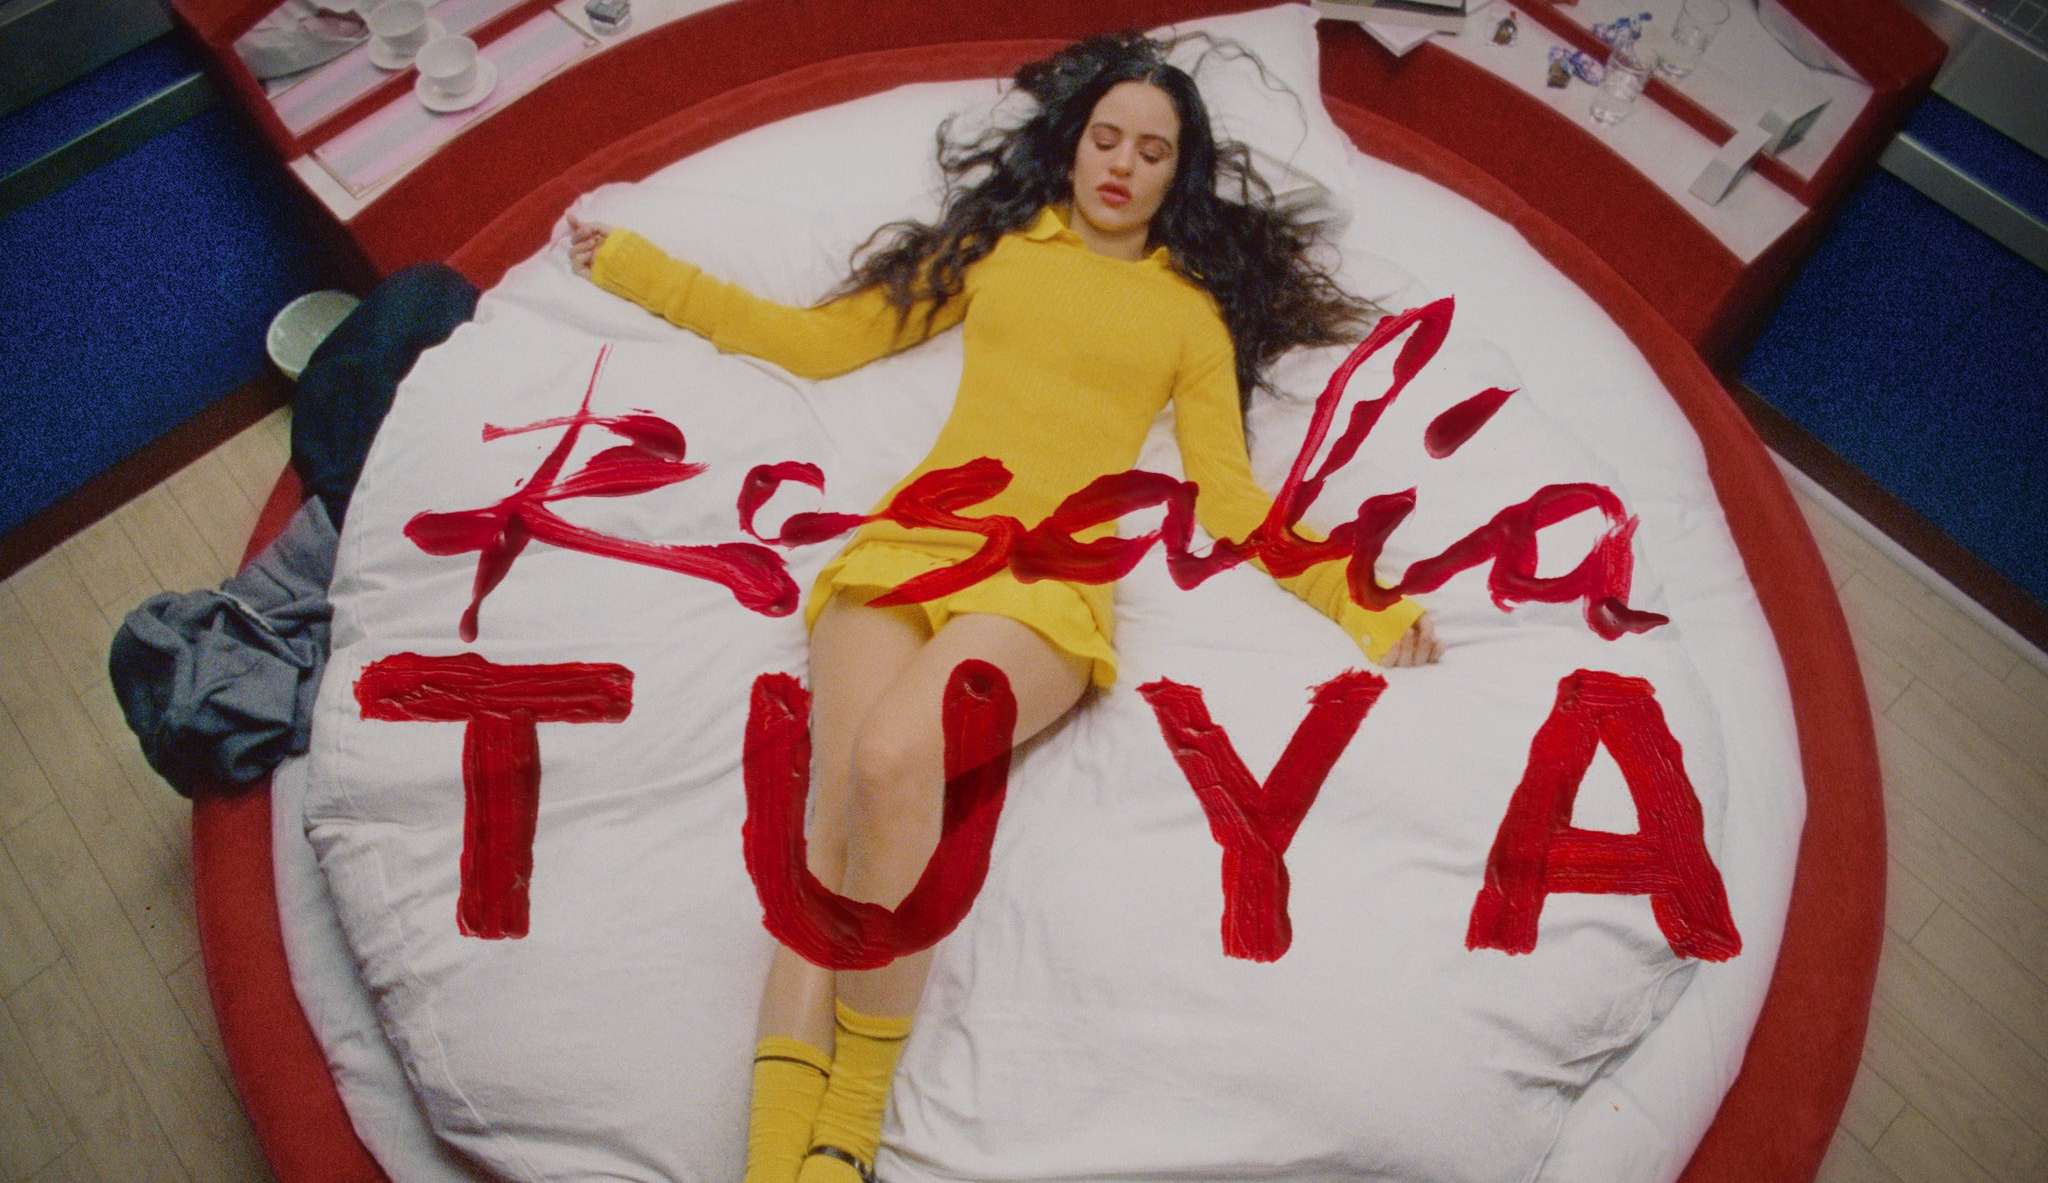 'TUYA': Confira o novo hit da cantora Rosalía  Lorena Bueri